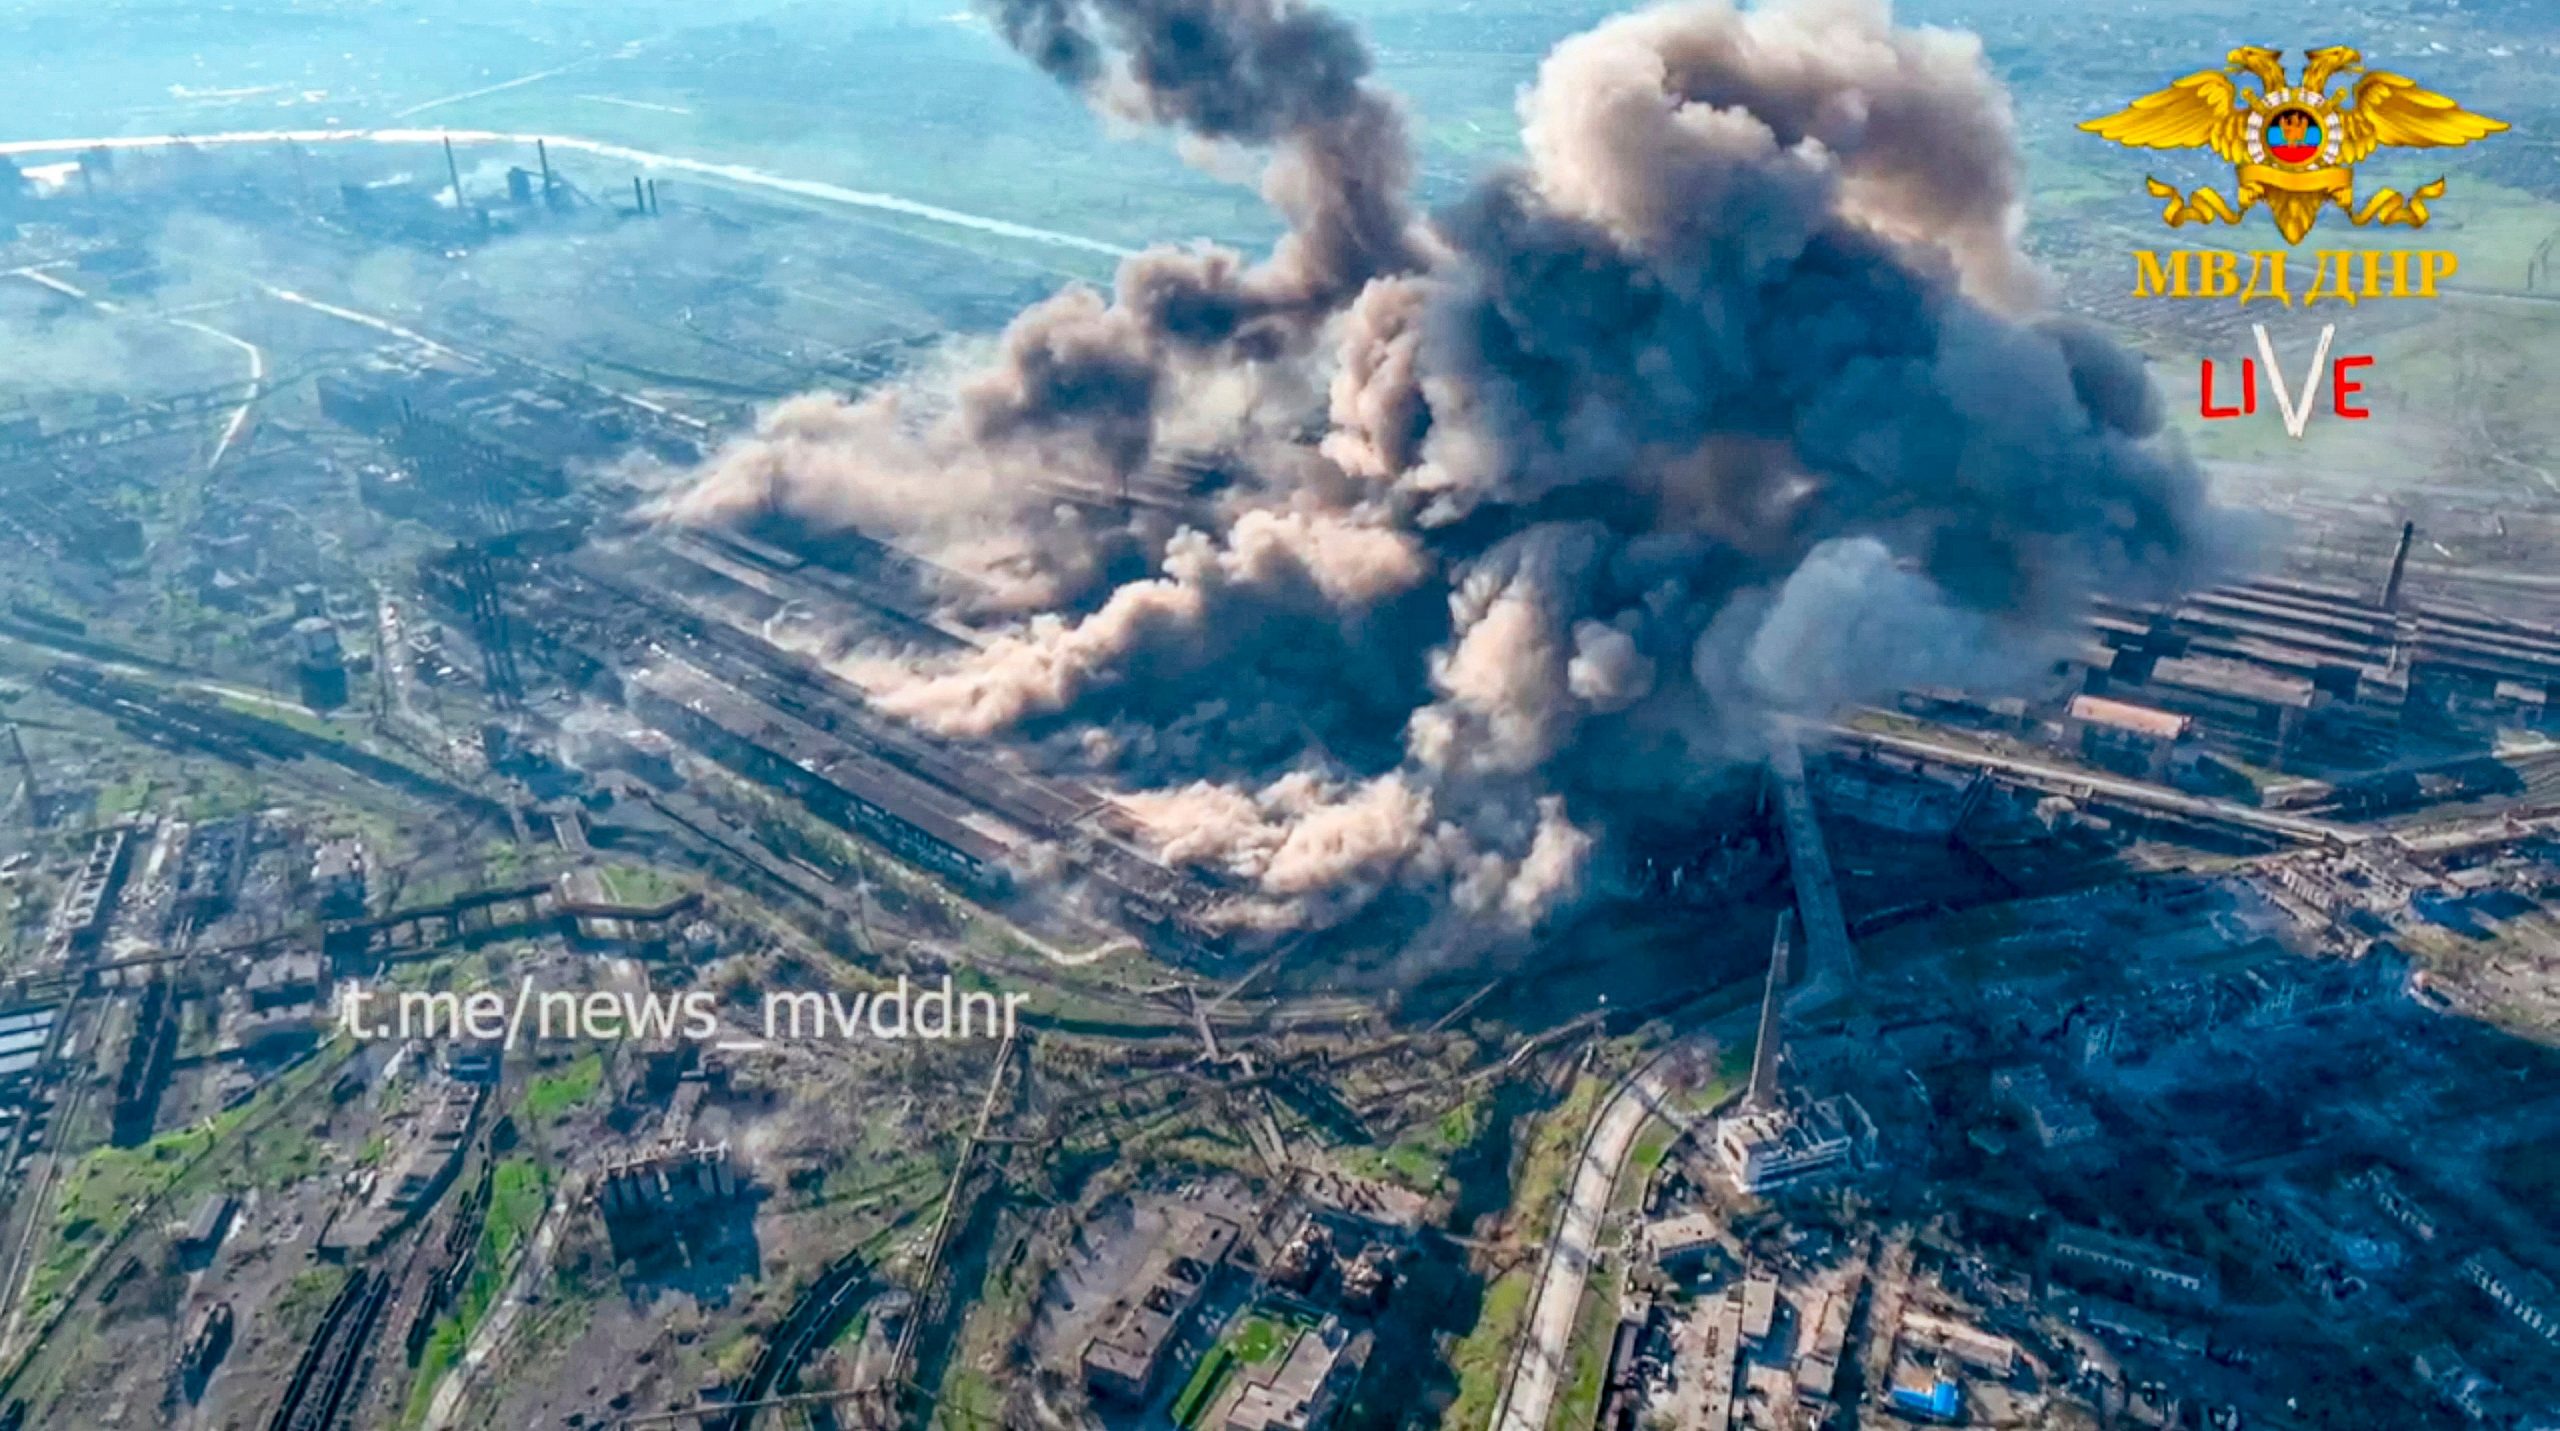 All civilians evacuated from Azovstal steel plant, claims Ukraine